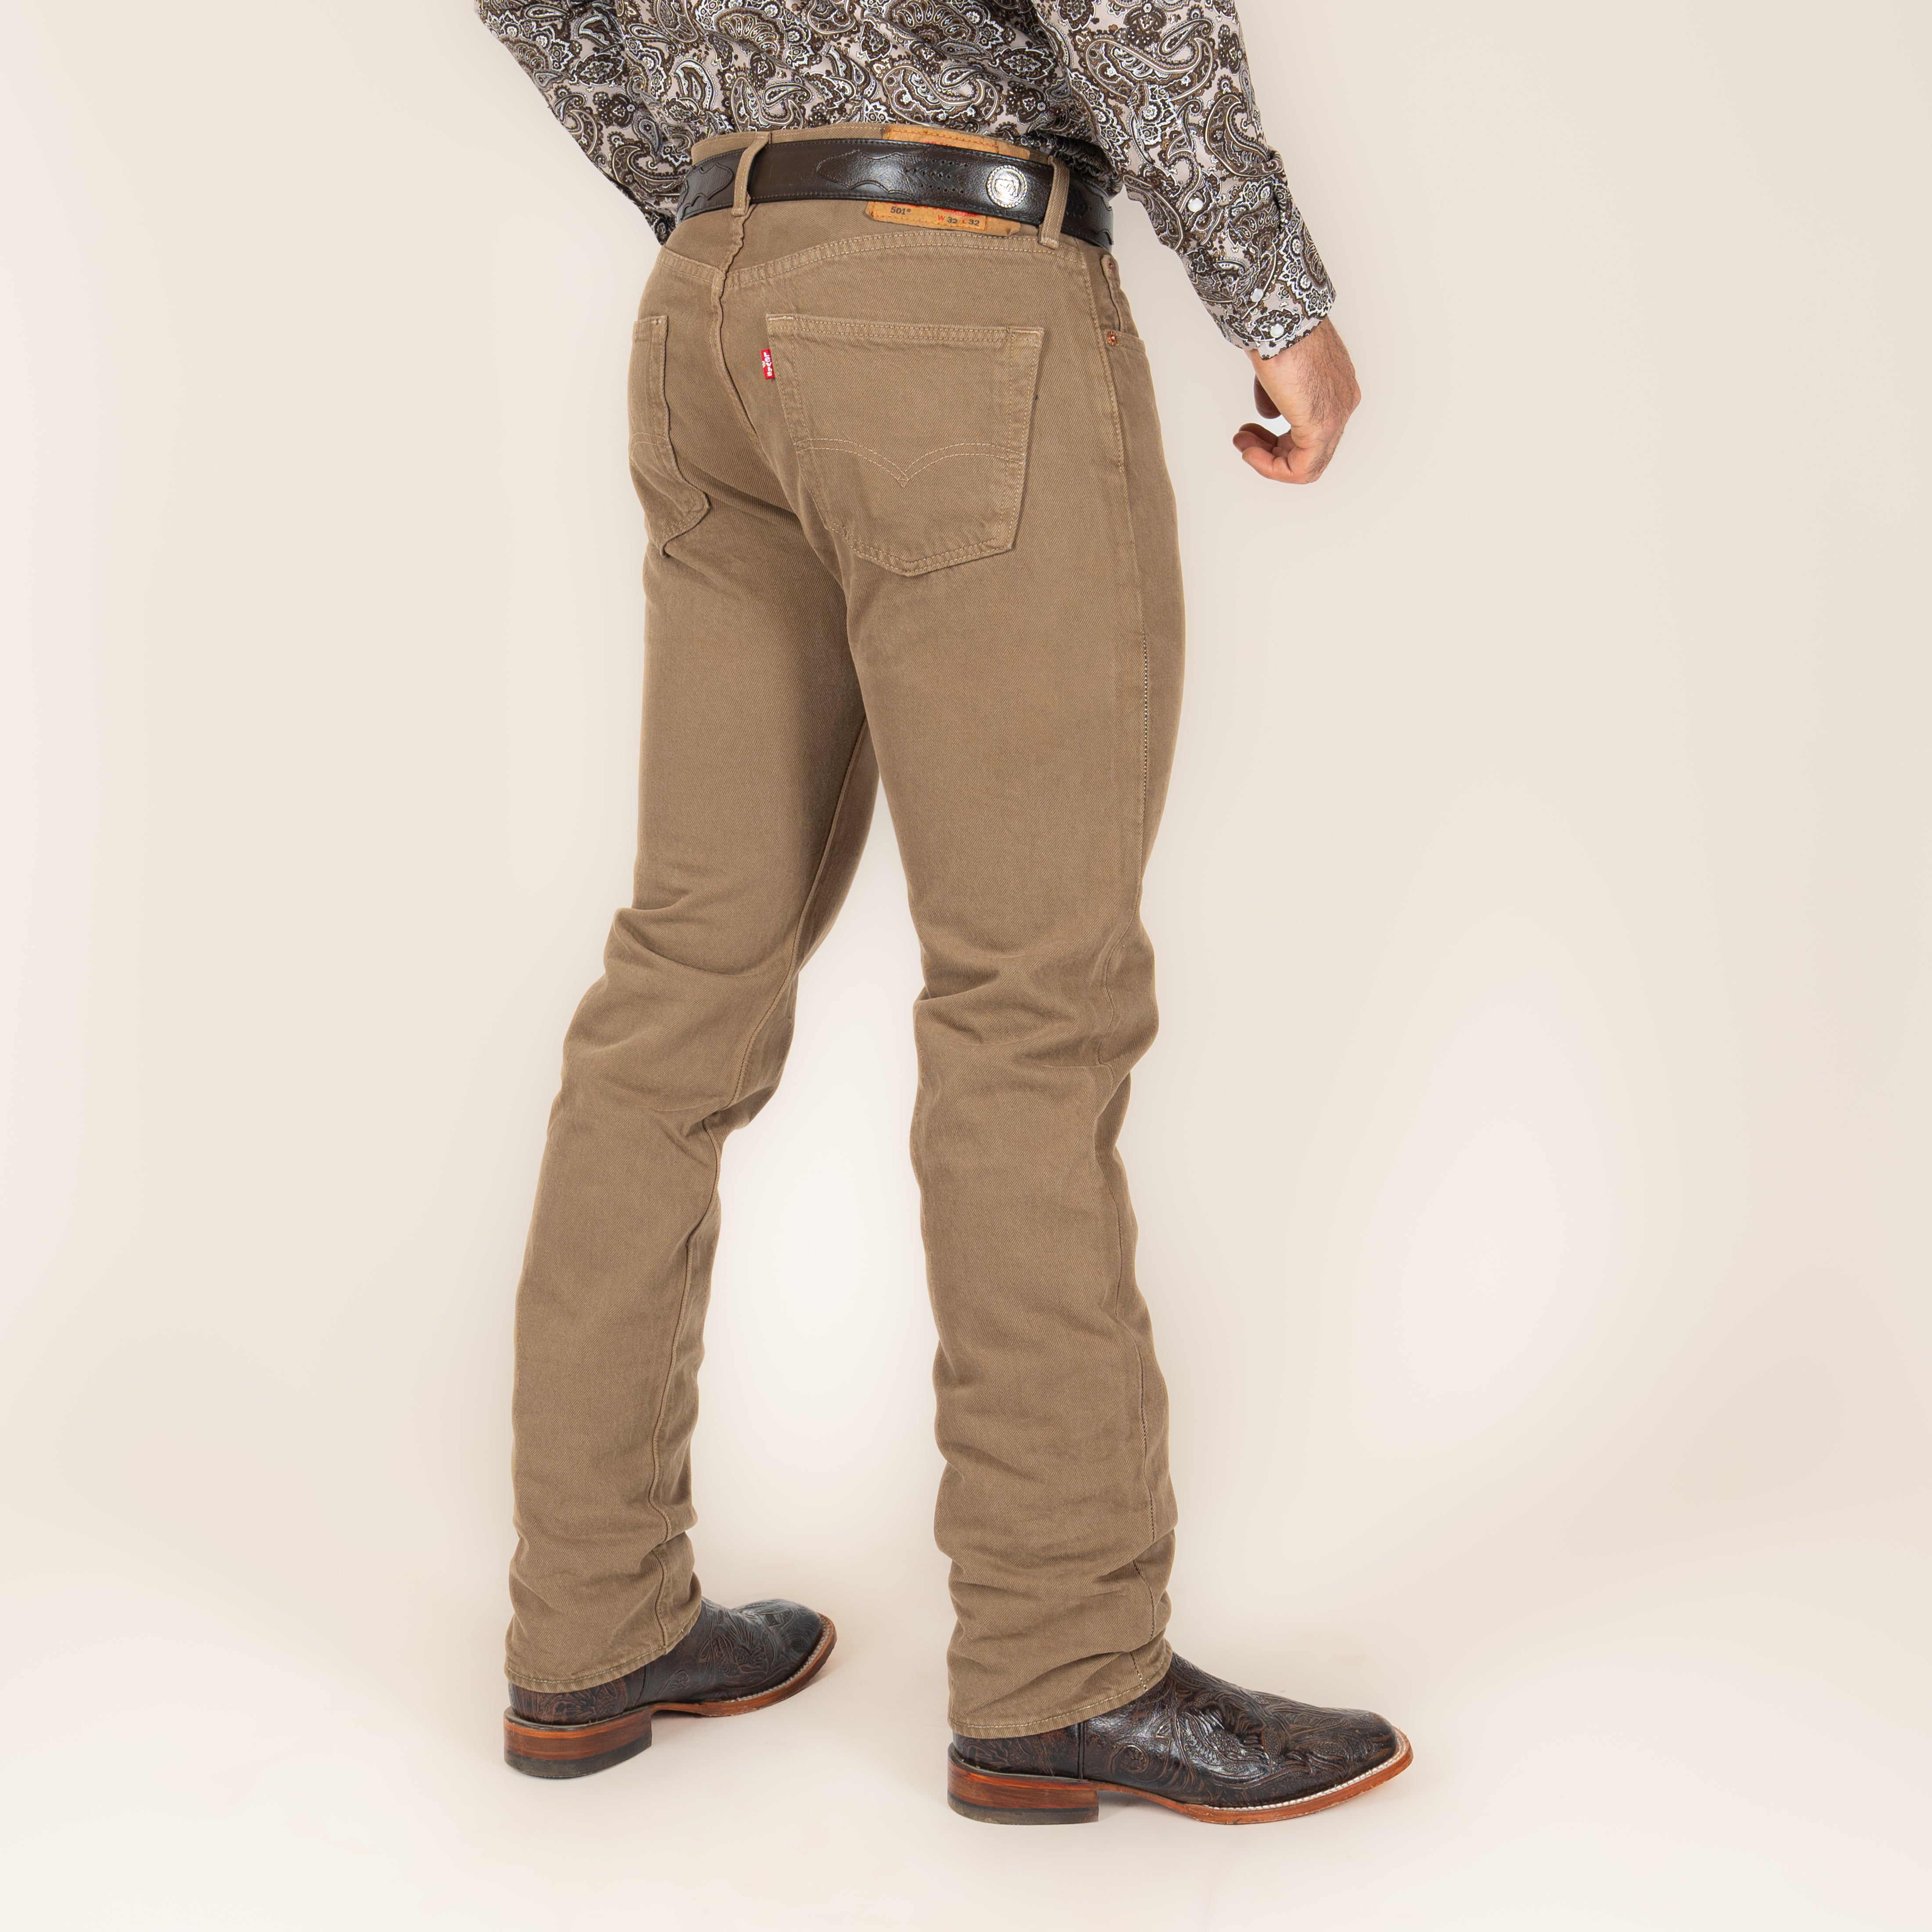 Jeans Levis 501 Light Brown Caballero